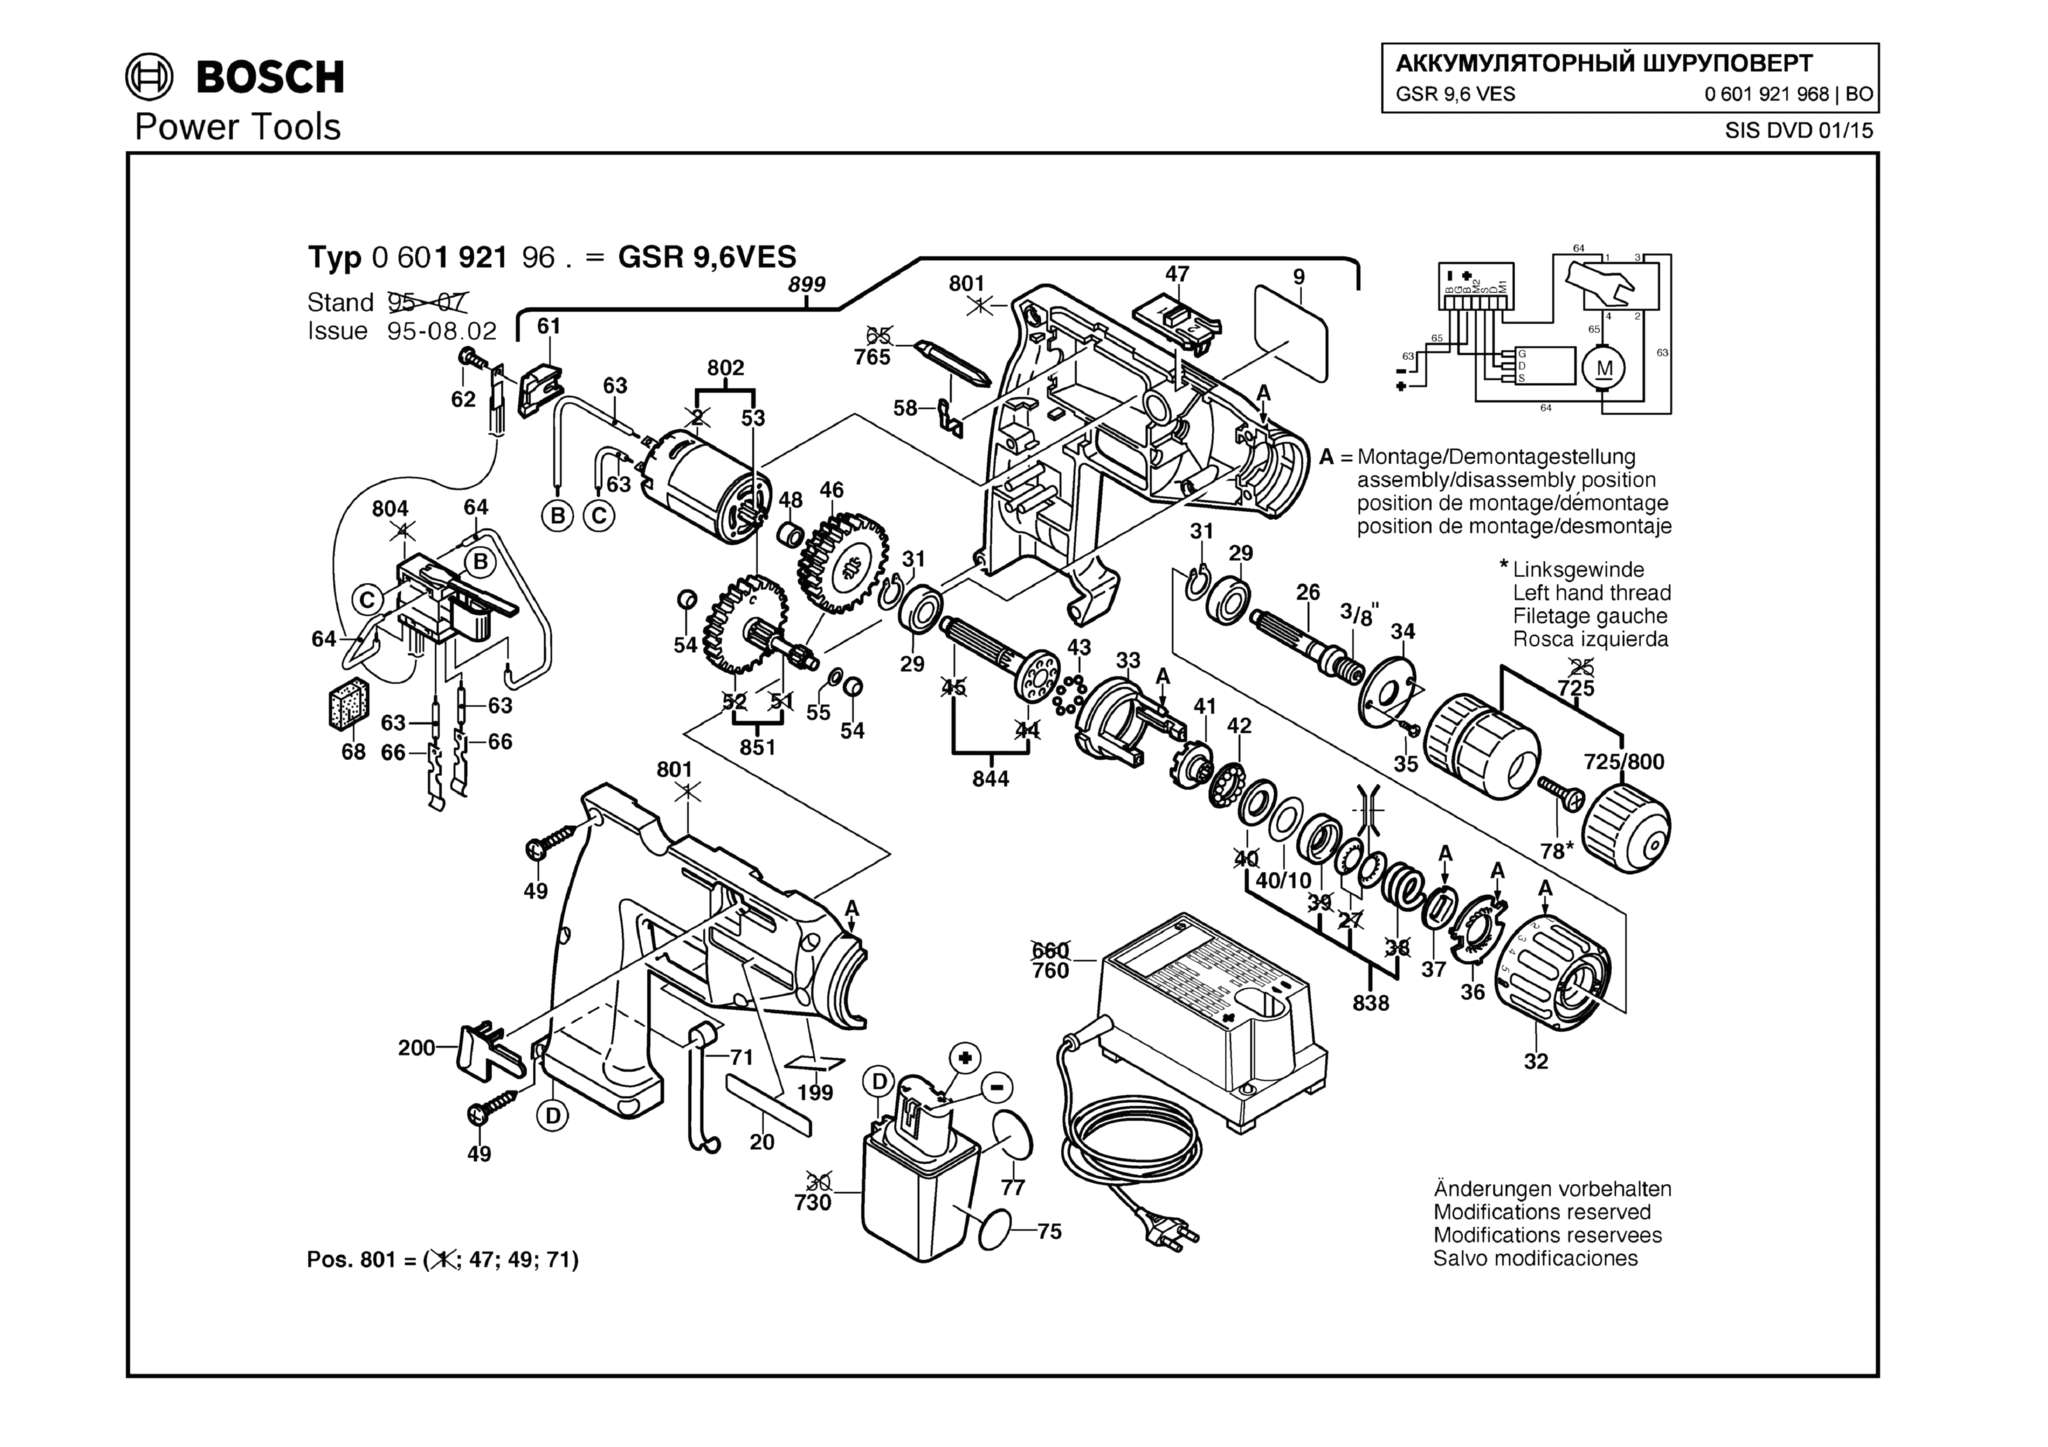 Запчасти, схема и деталировка Bosch GSR 9,6 VES (ТИП 0601921968)